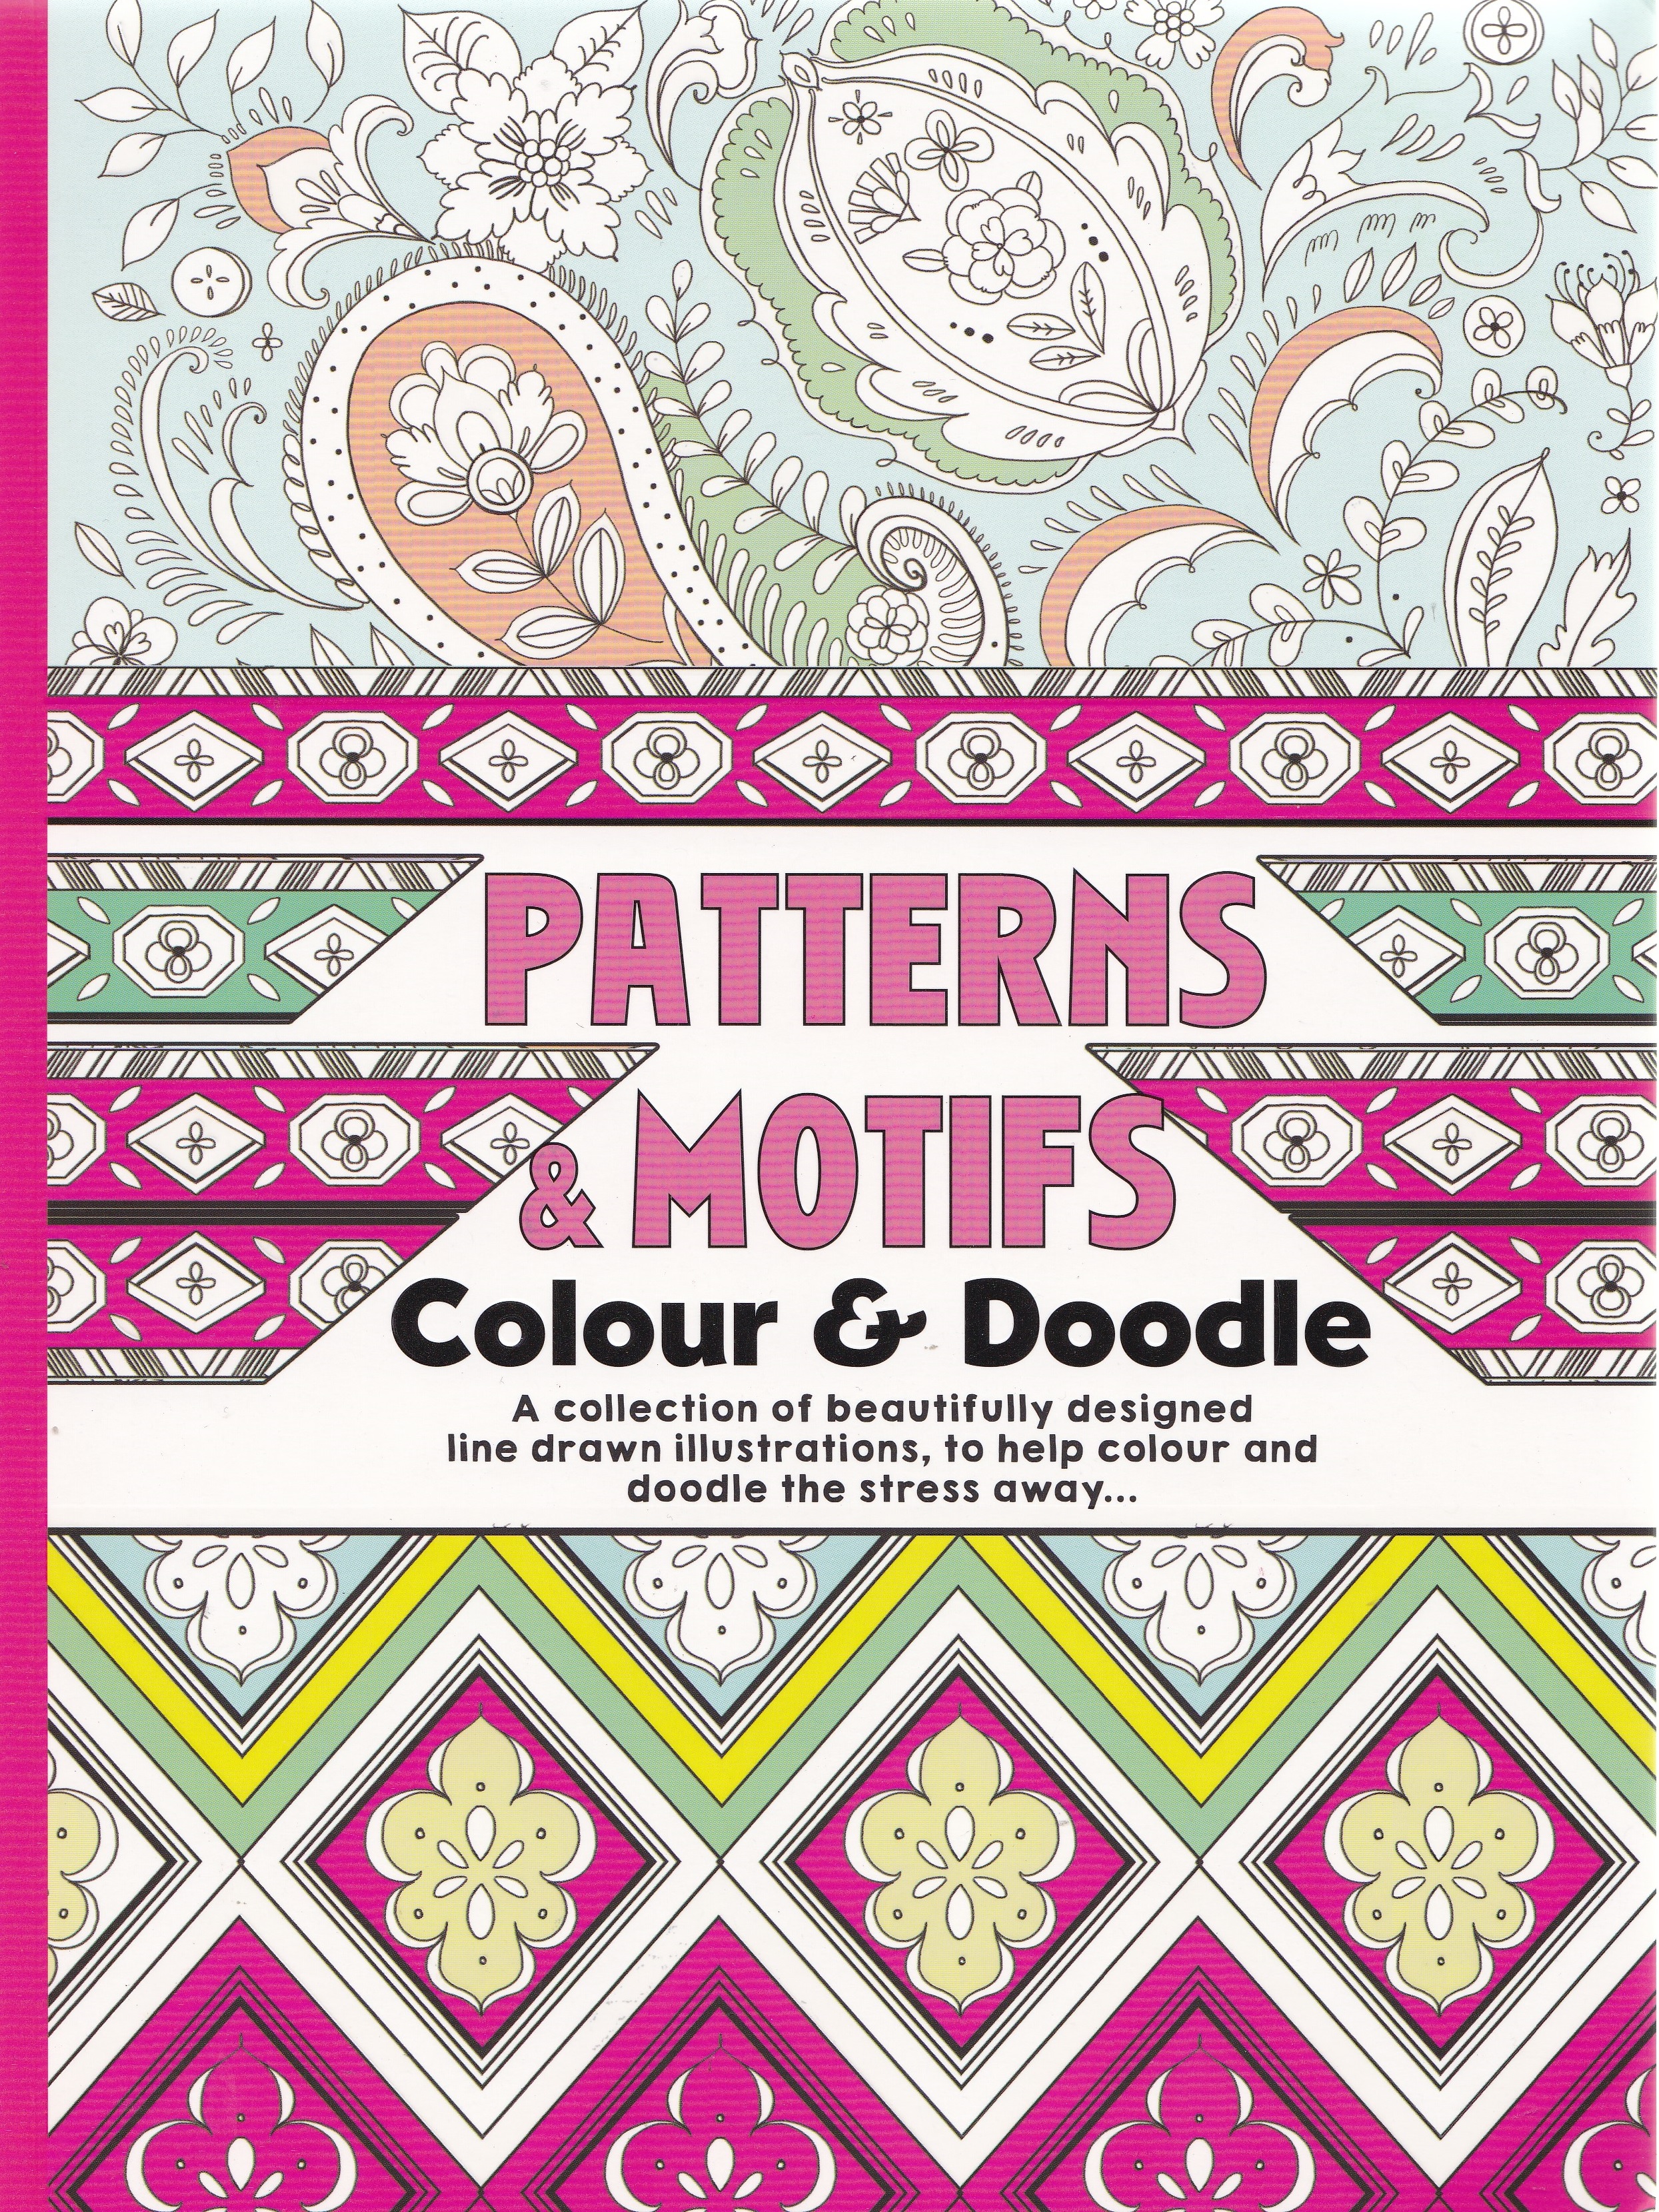 Colour Therapy, Patterns and motifs. Carte de colorat antistress, Modele si motive